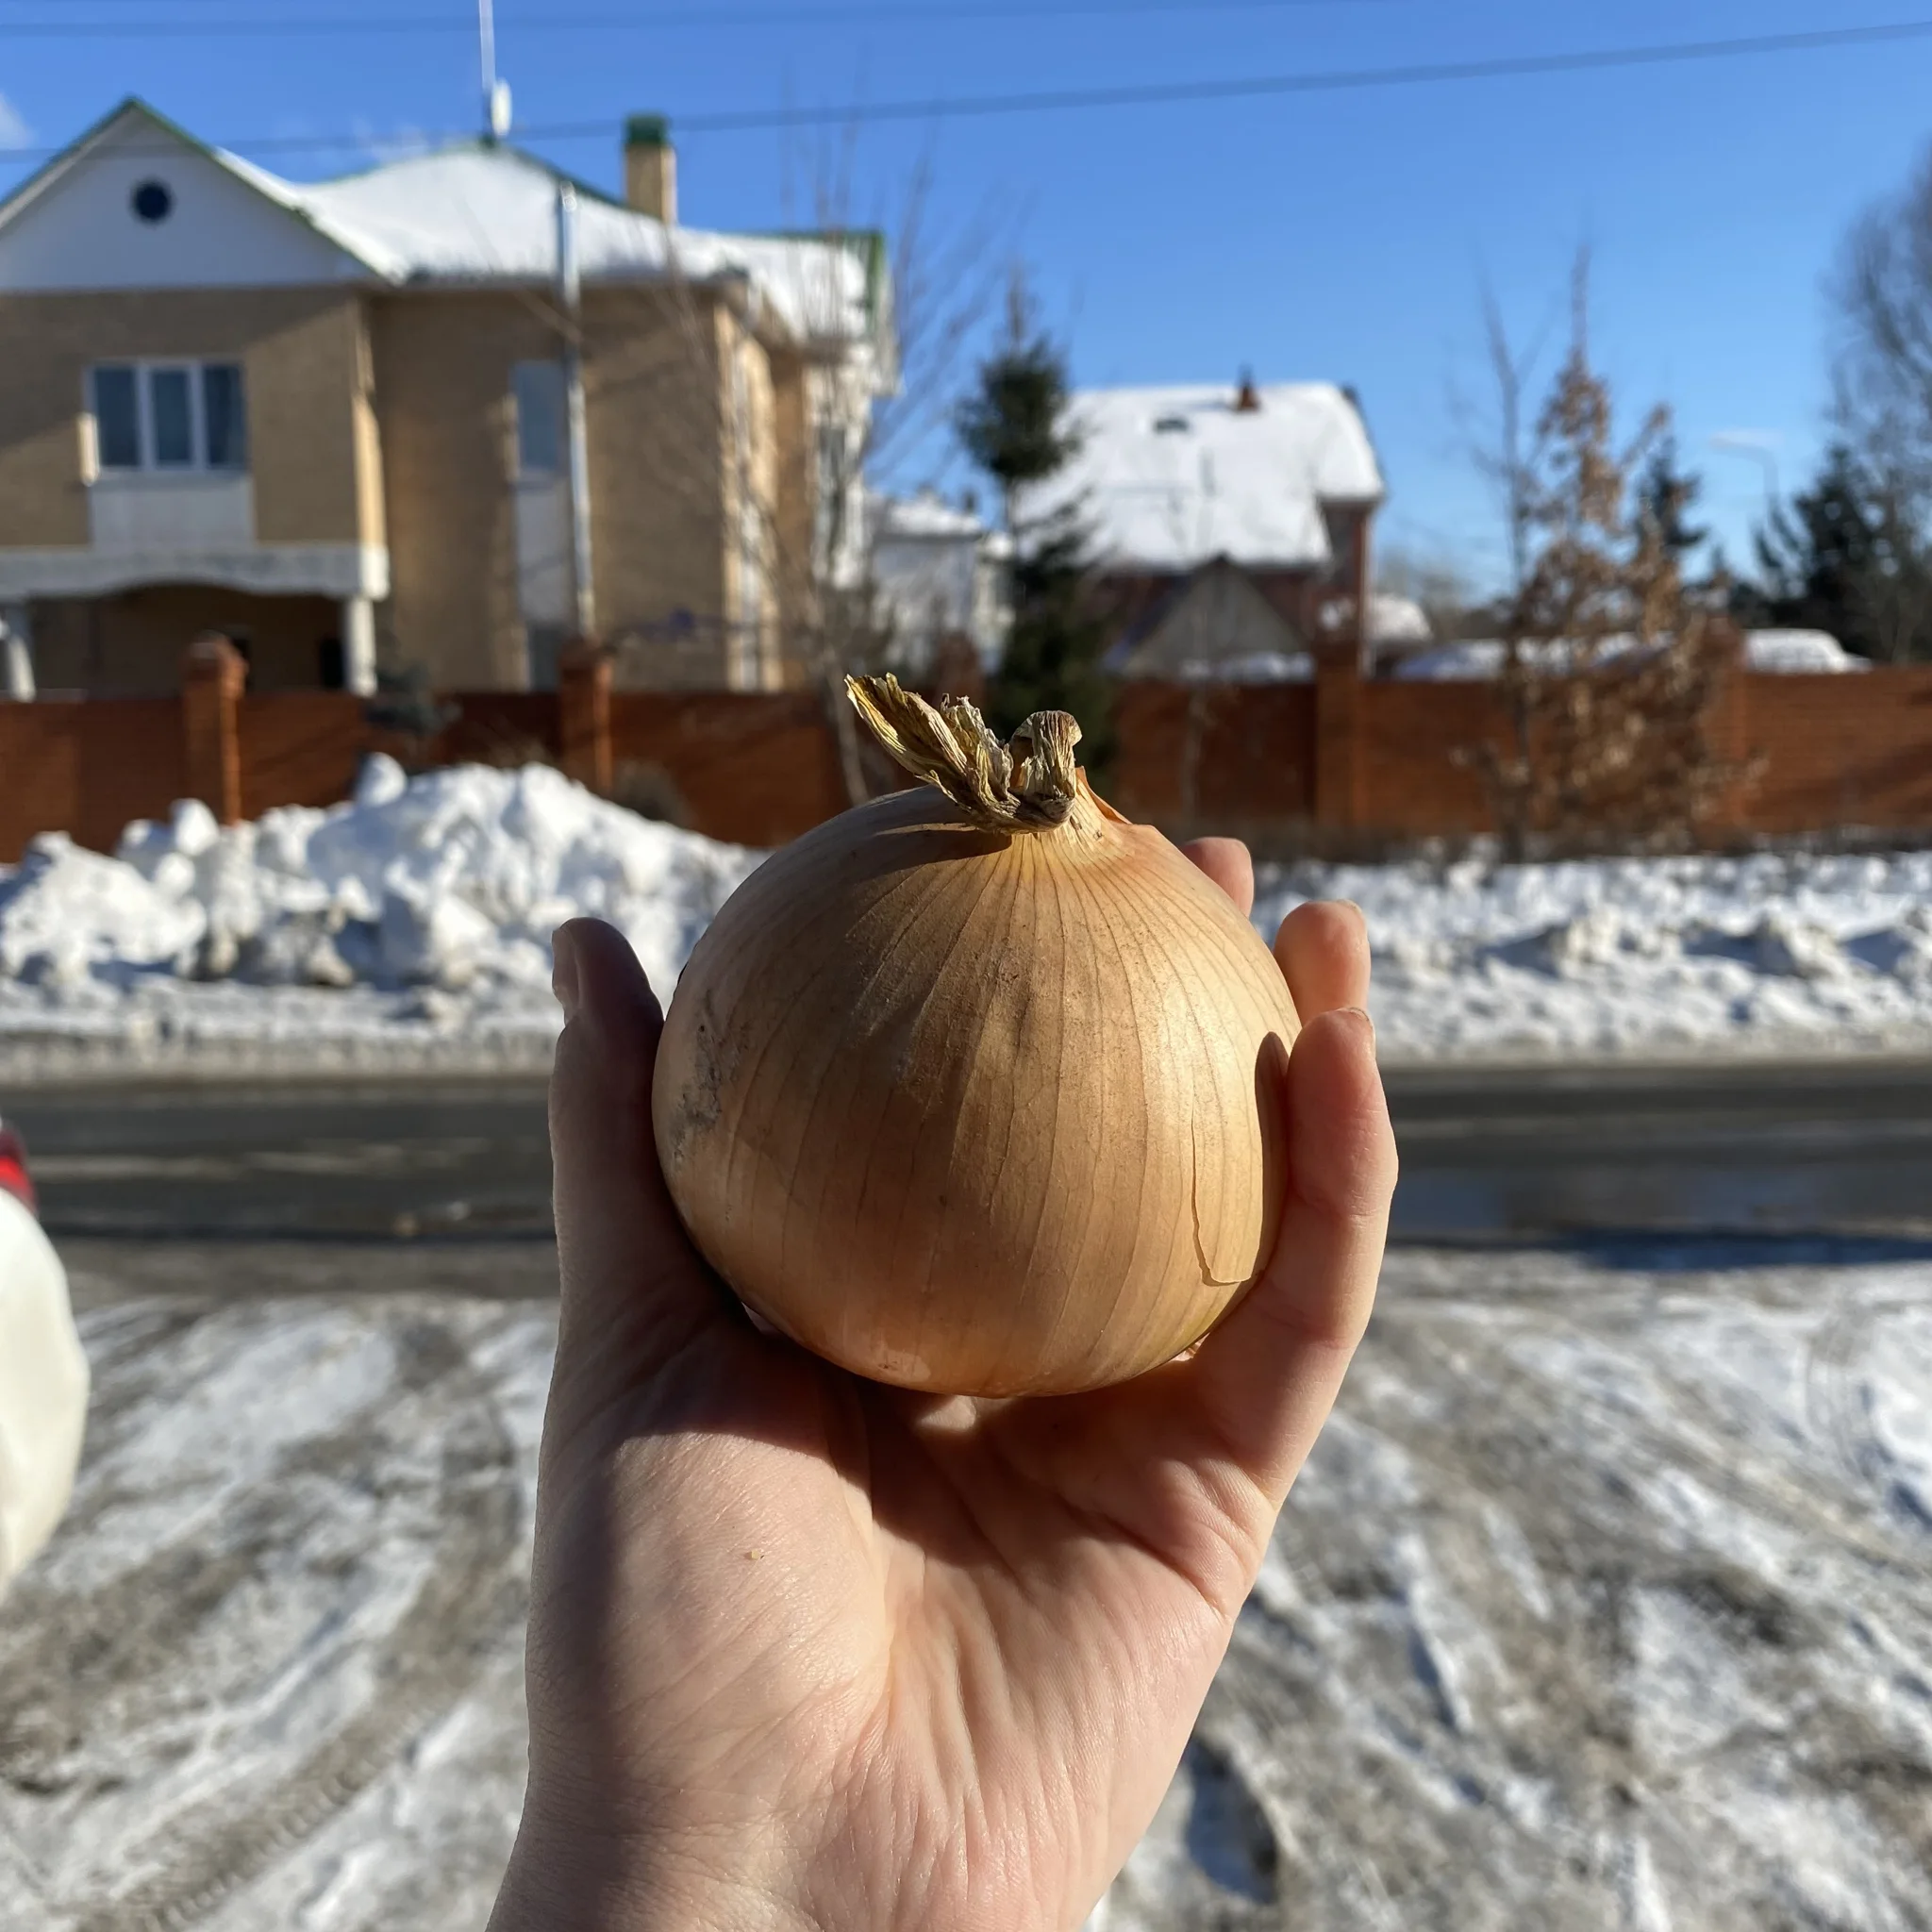 Onion manas